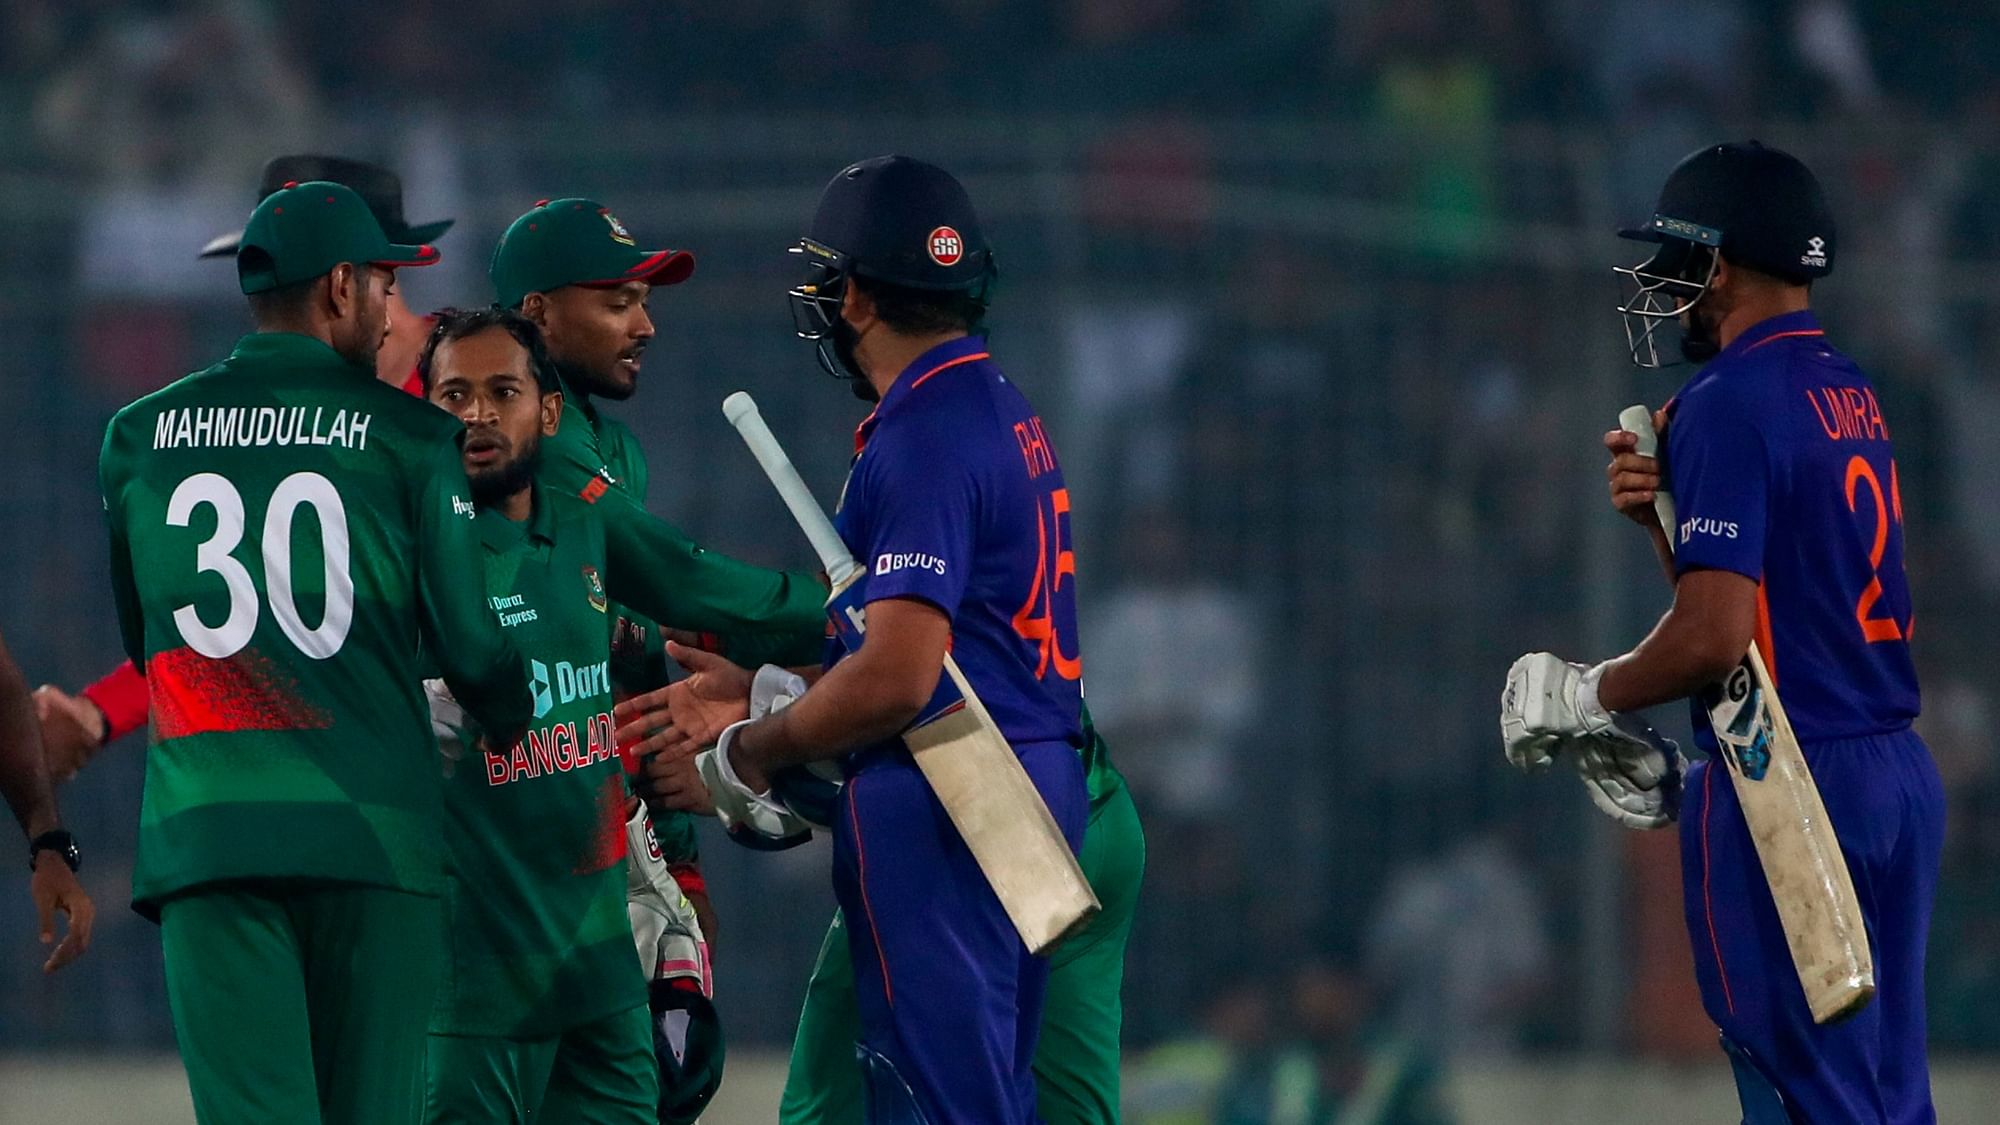 <div class="paragraphs"><p>Bangladesh beat India by 5 runs to win the ODI series 2-0.</p></div>